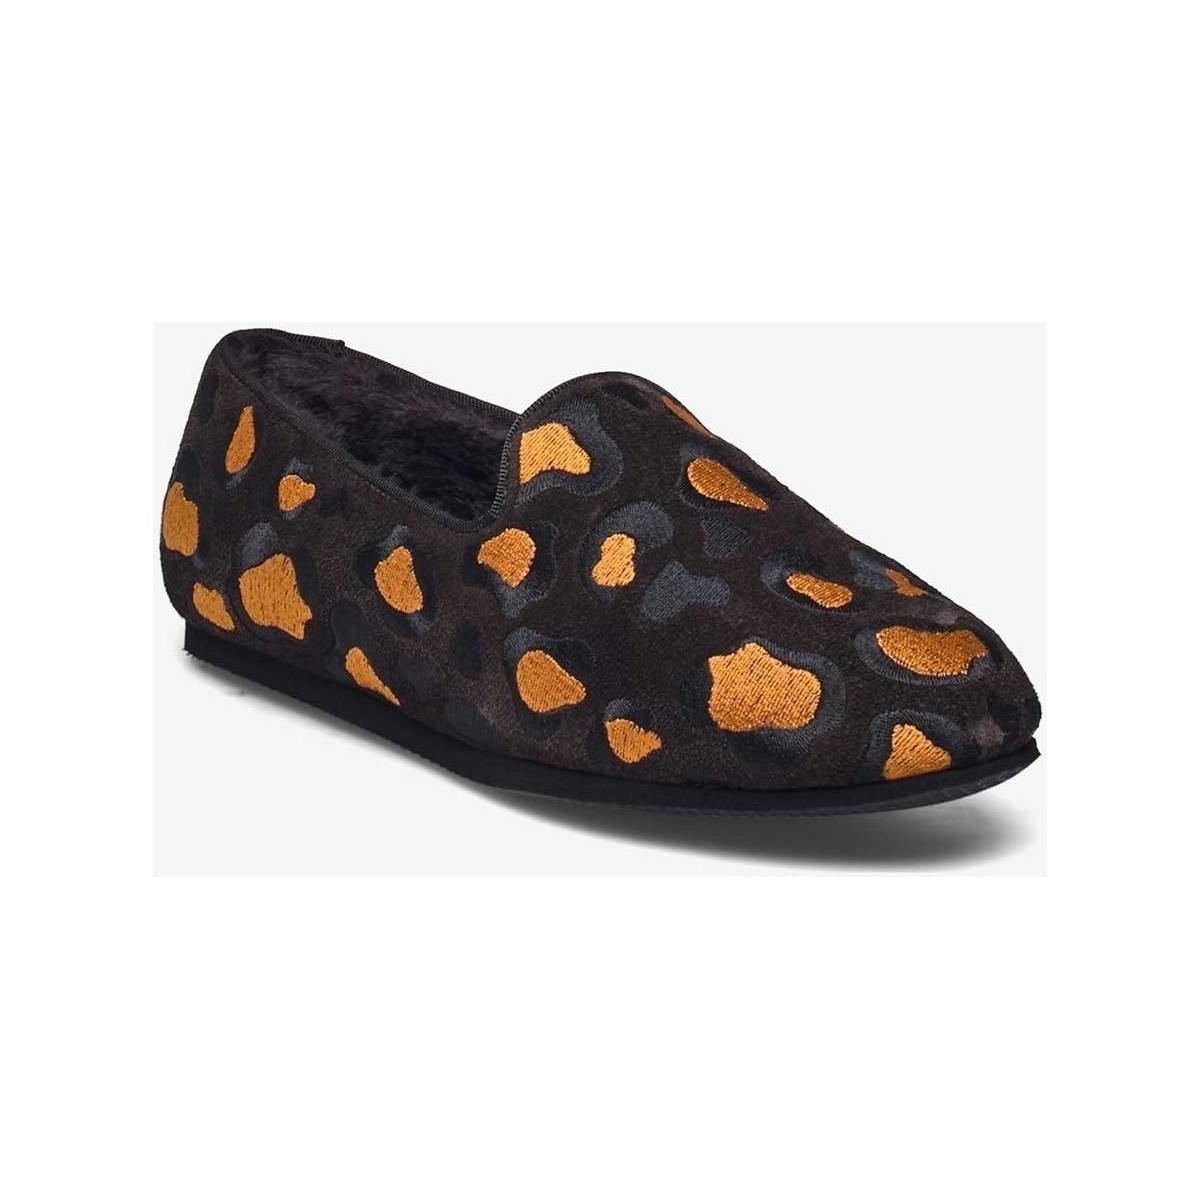 Schoenen Dames Sloffen Hums leopard suede loafer brown AW2001 Bruin